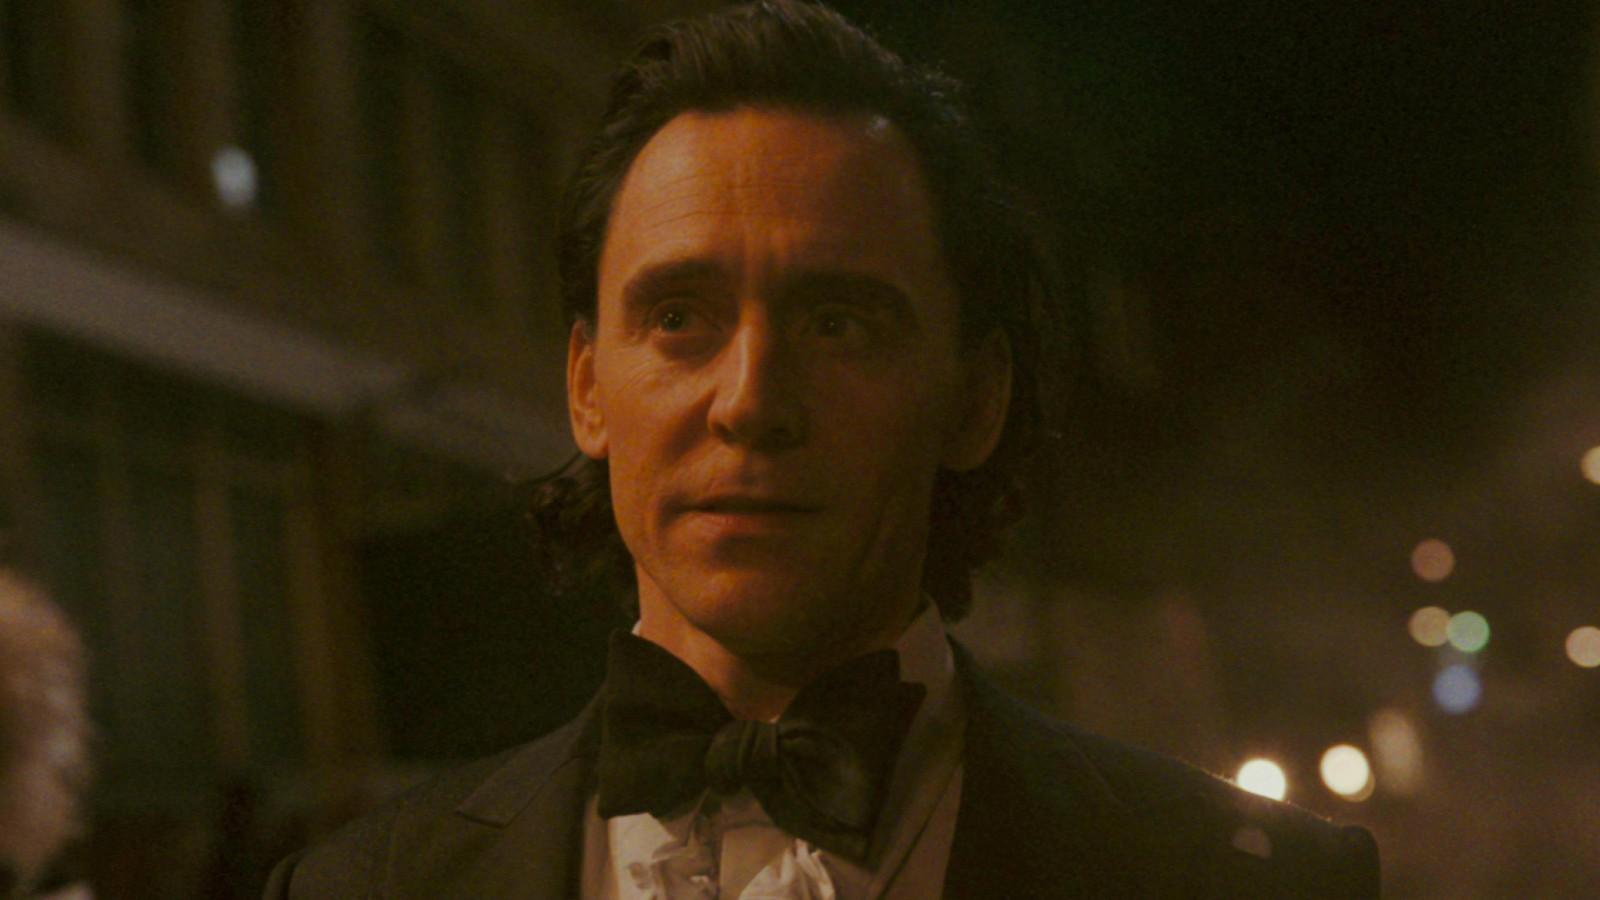 Loki' Renewed For Season 2 At Disney+ – Deadline